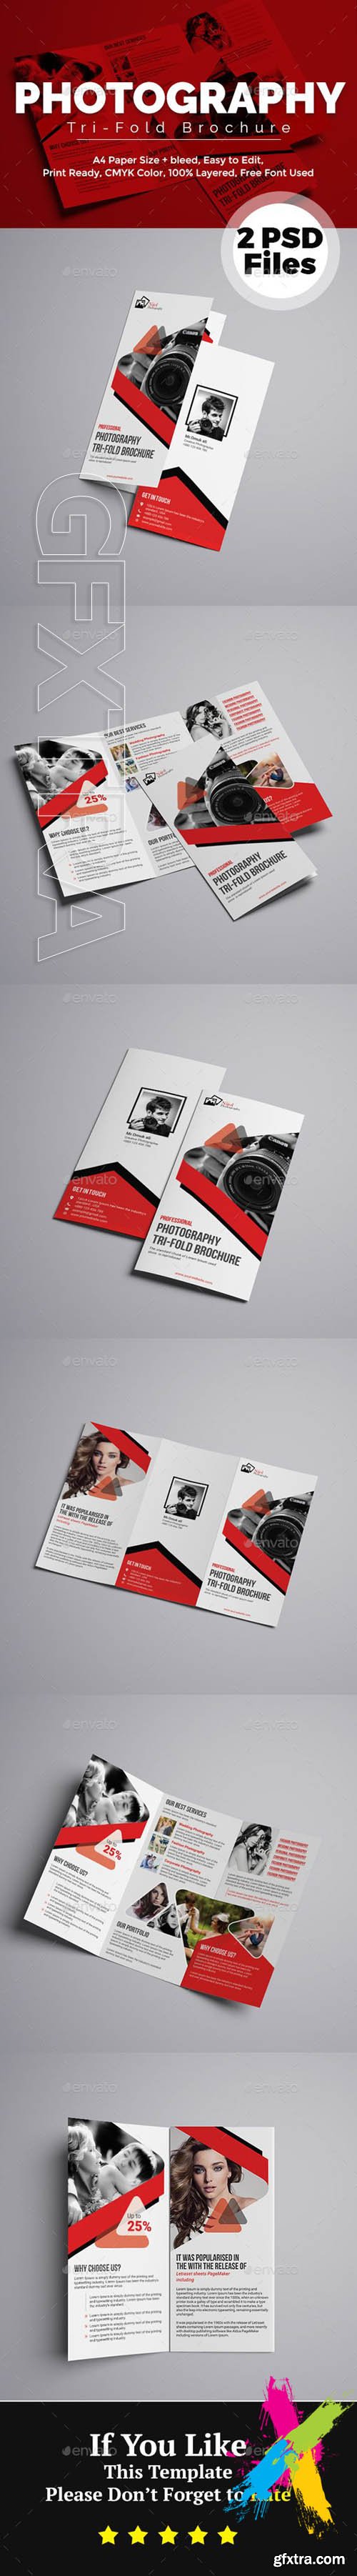 Graphicriver - Photography Tri-Fold Brochure 20354036